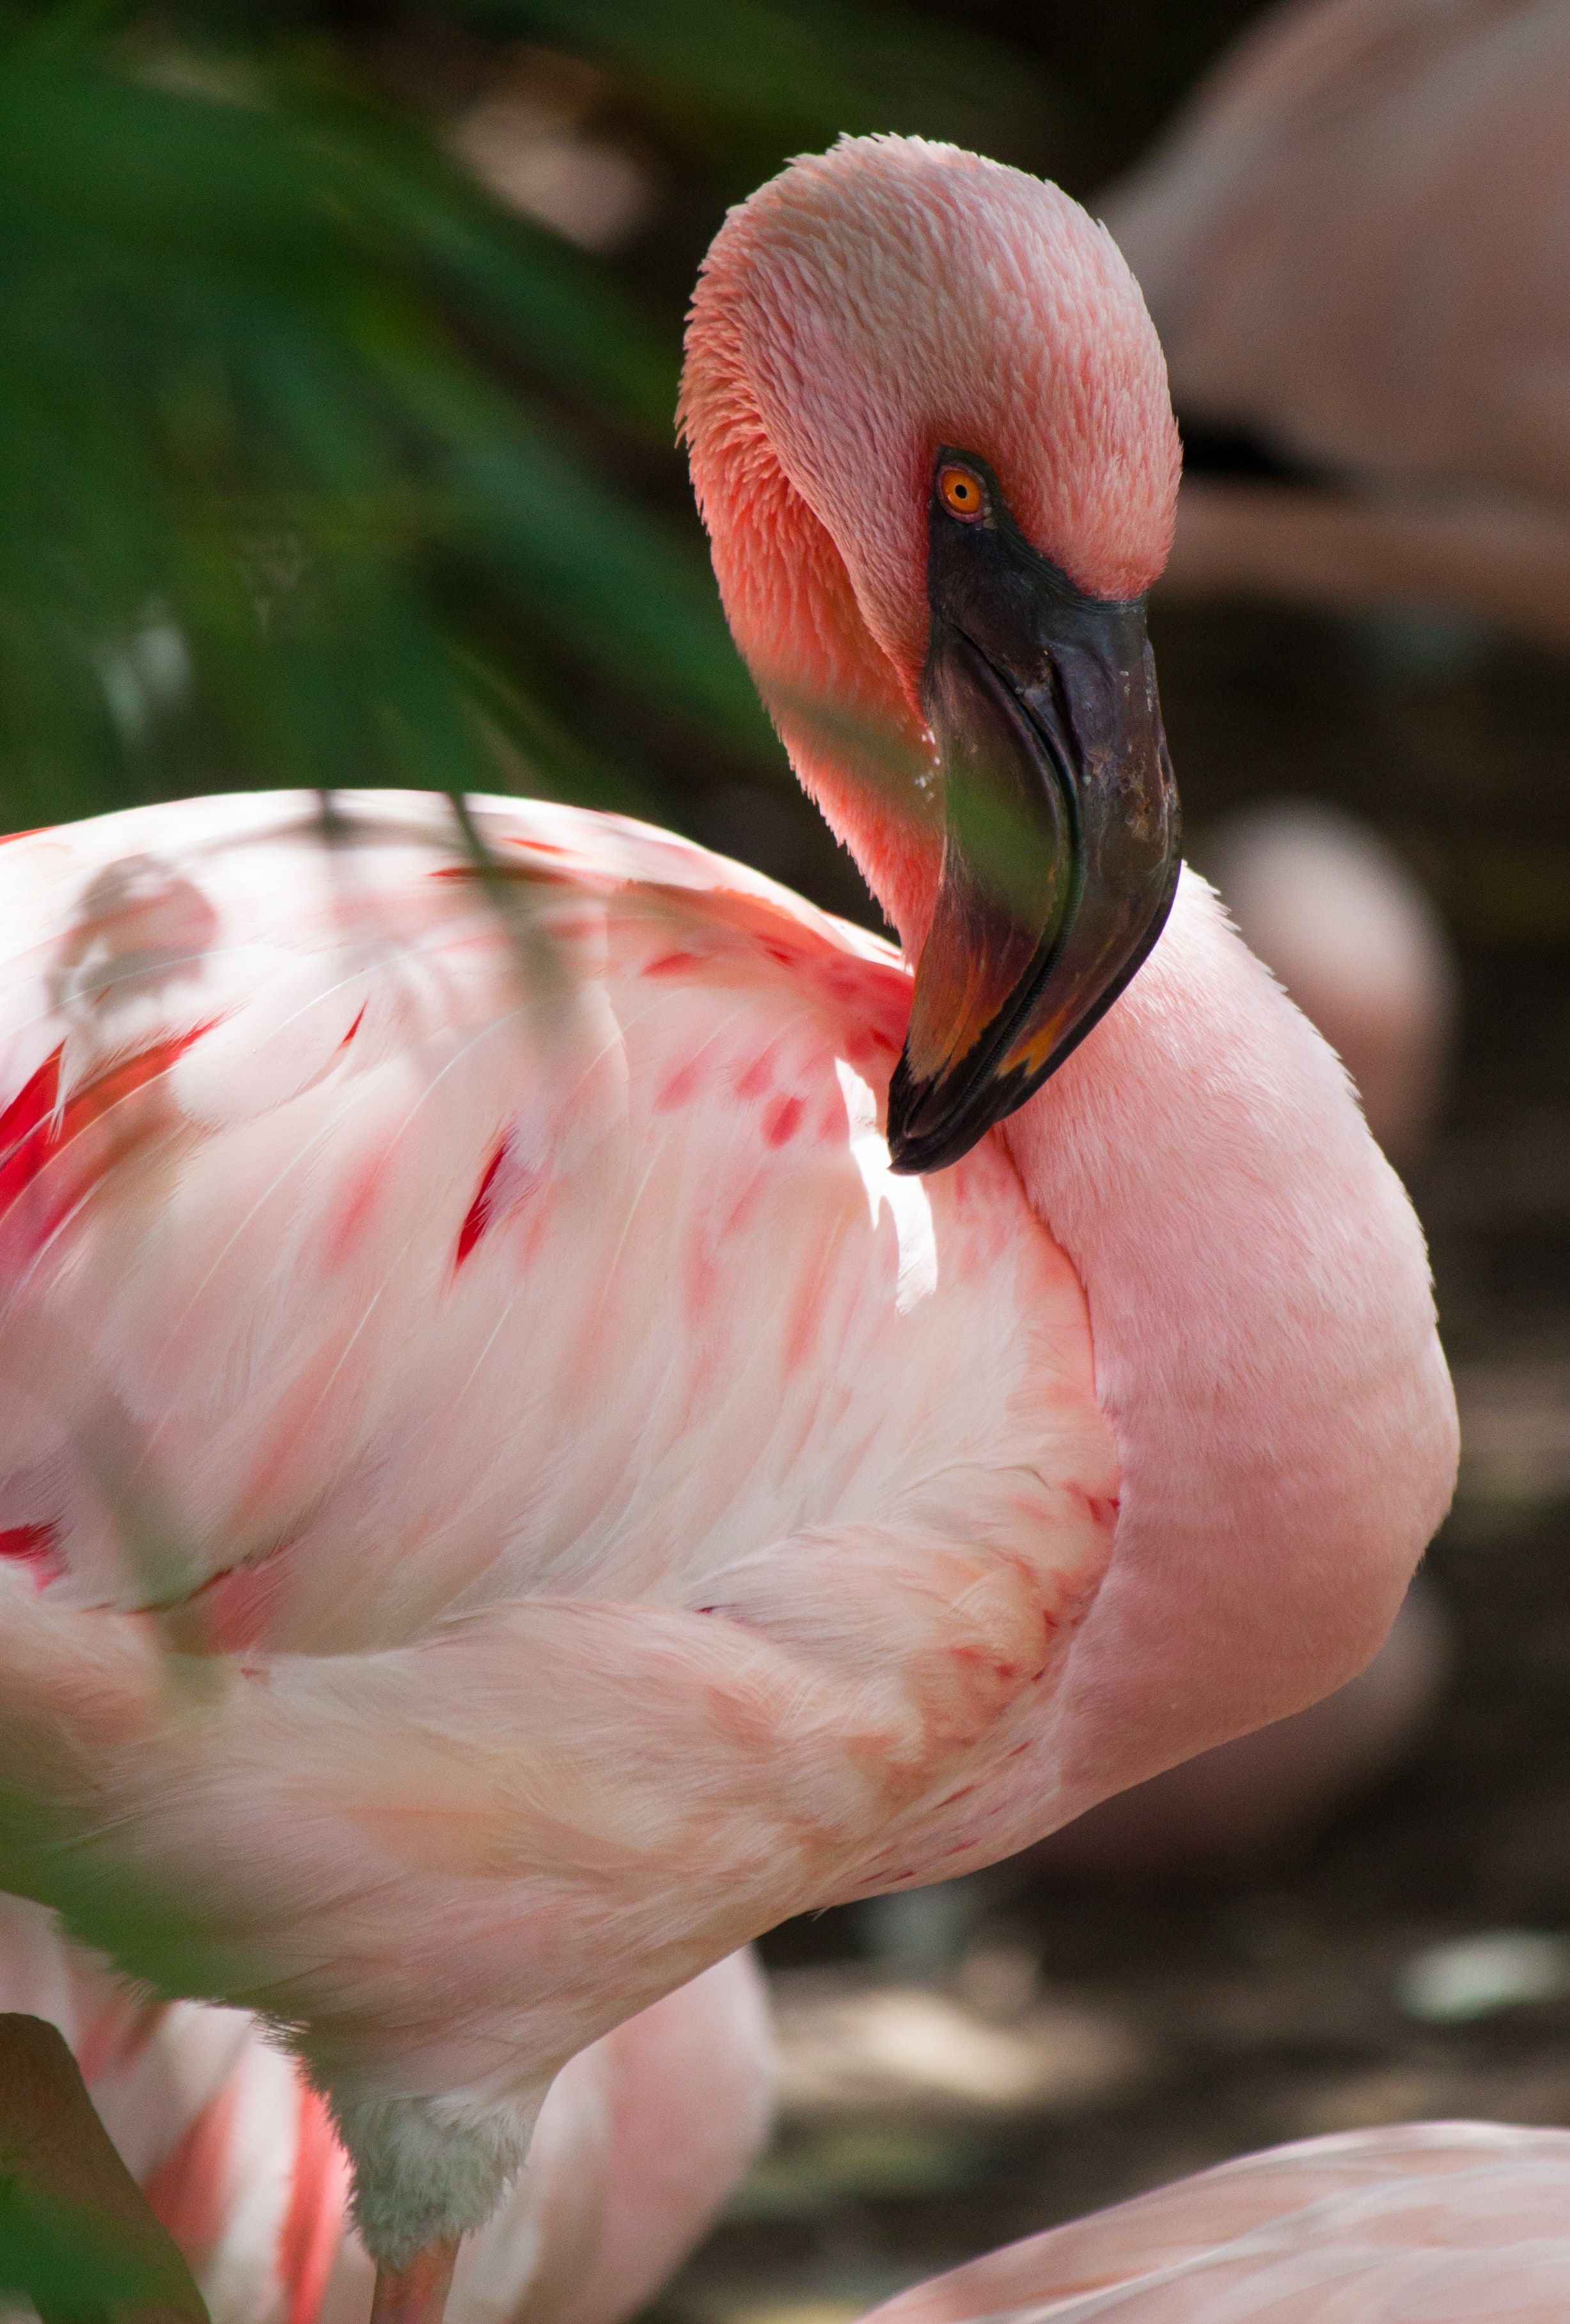  Flamingo Hintergrundbild 2455x3634. Flamingo Bilder Und Fotos · Kostenlos Downloaden · Stock Fotos